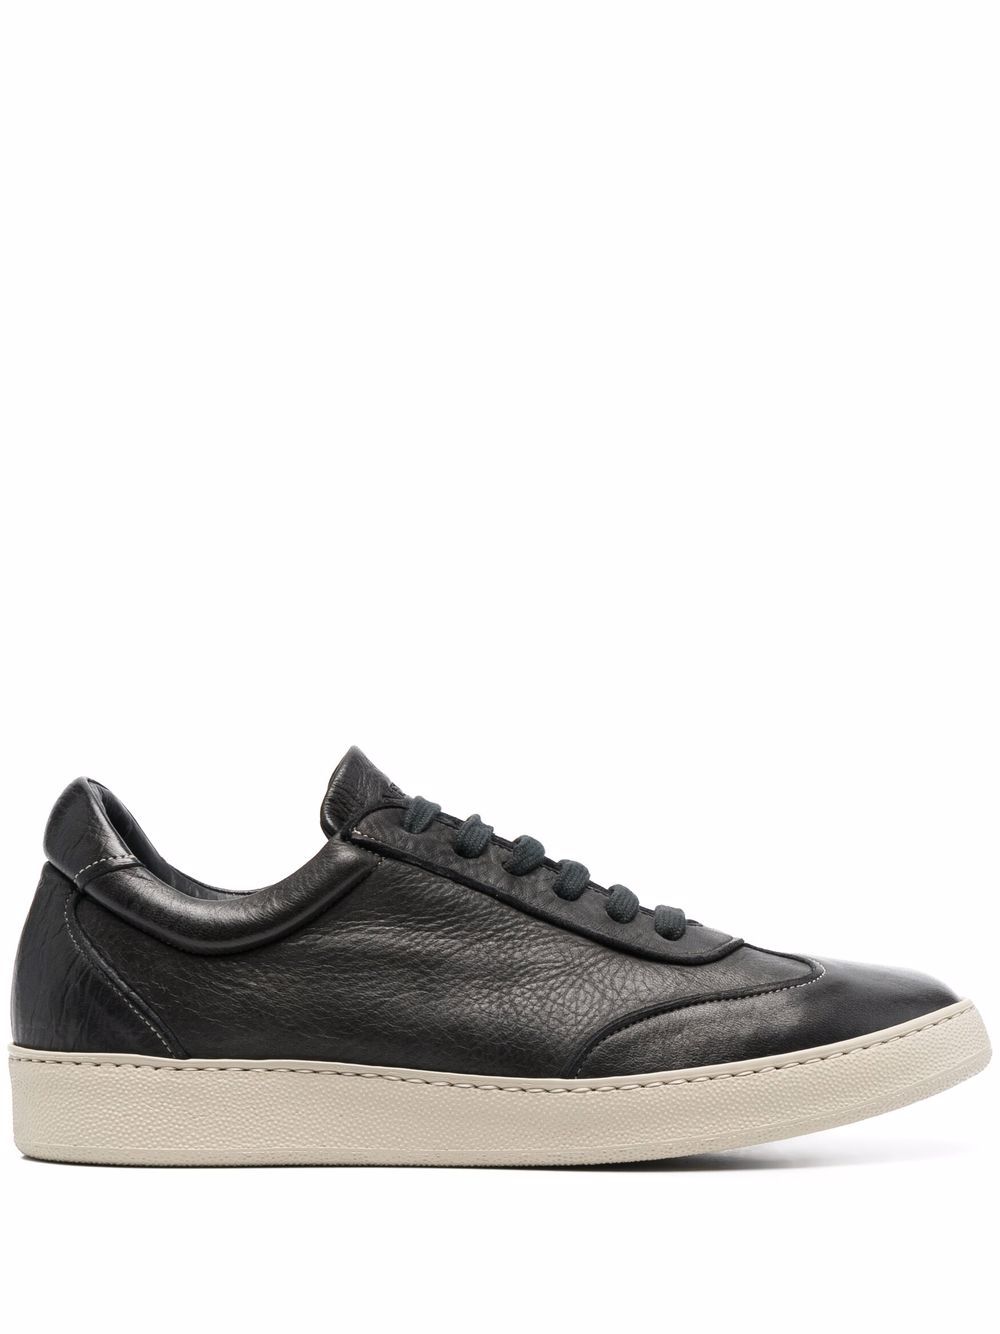 Corneliani lace-up Leather Sneakers - Farfetch